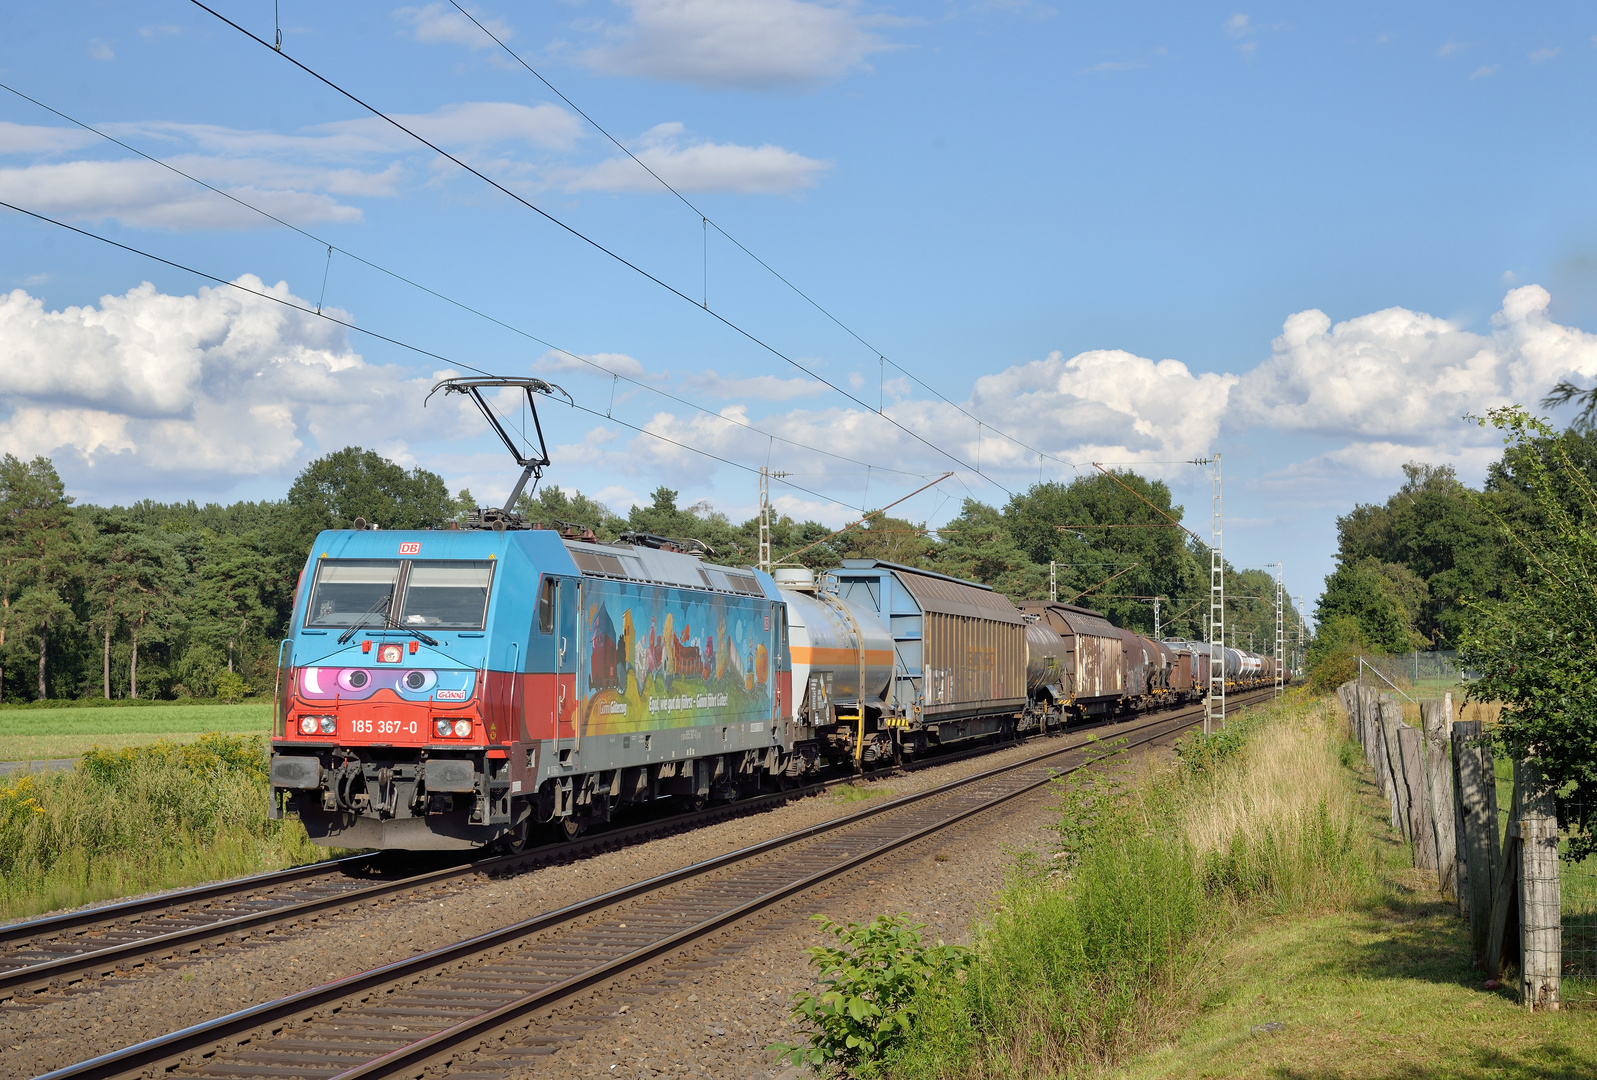 185 367-0 --Günni Güterzug-- am 19.08.20 in Hamm-Lerche